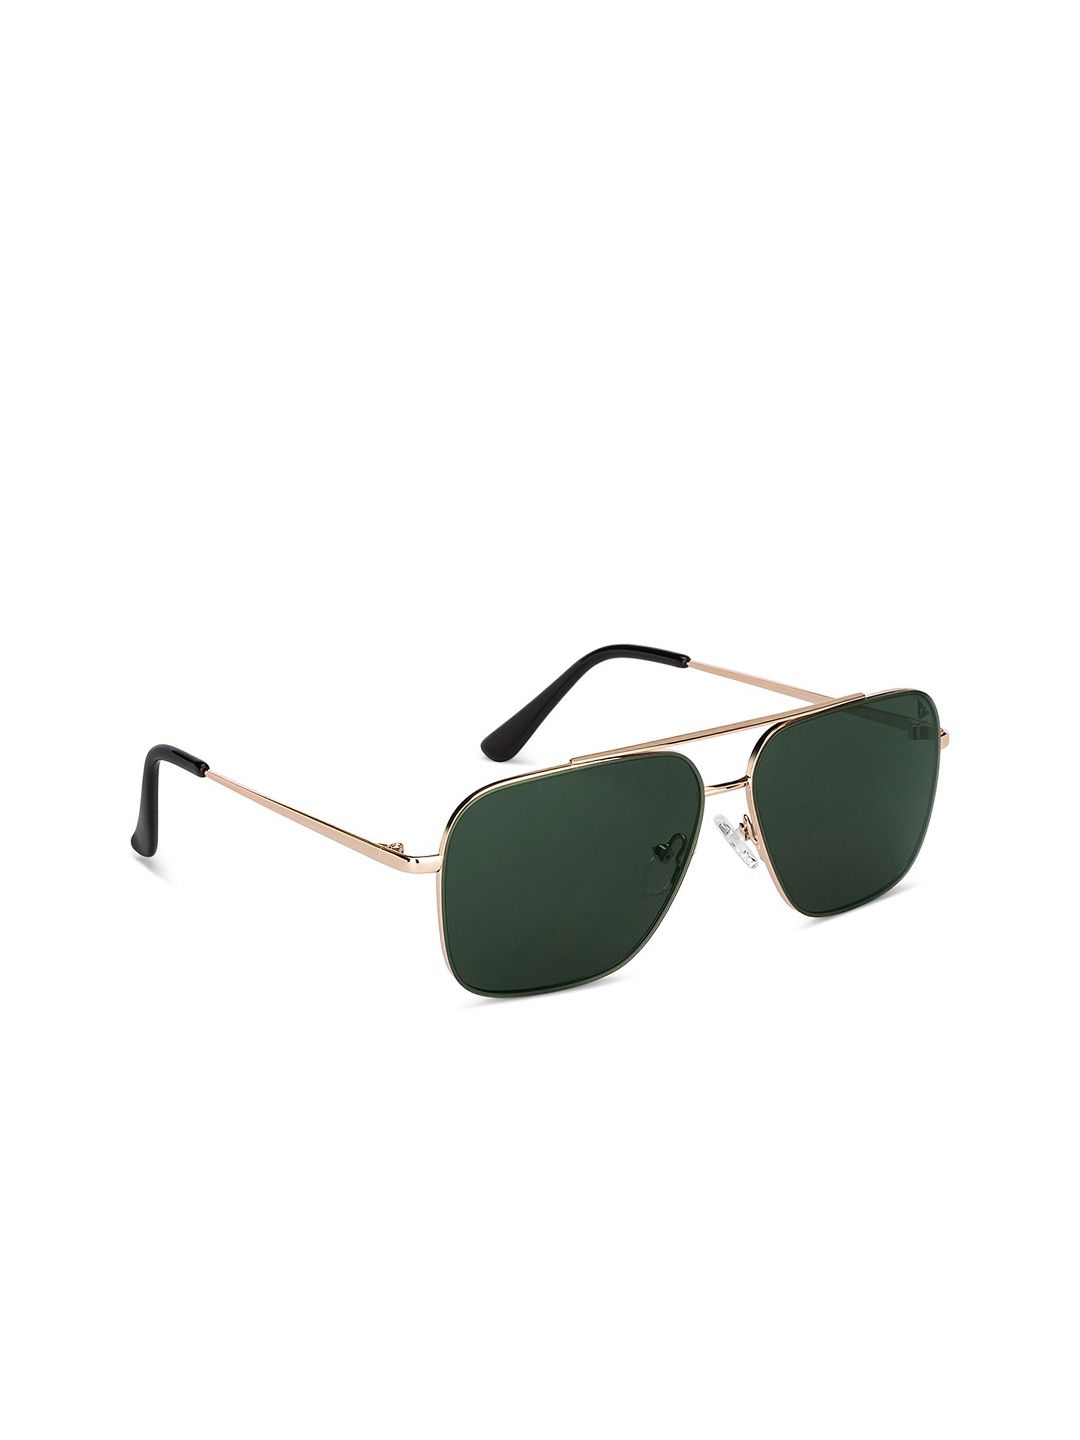 Vincent Chase Green Lens & Gold-Toned Full Rim Aviator Sunglasses